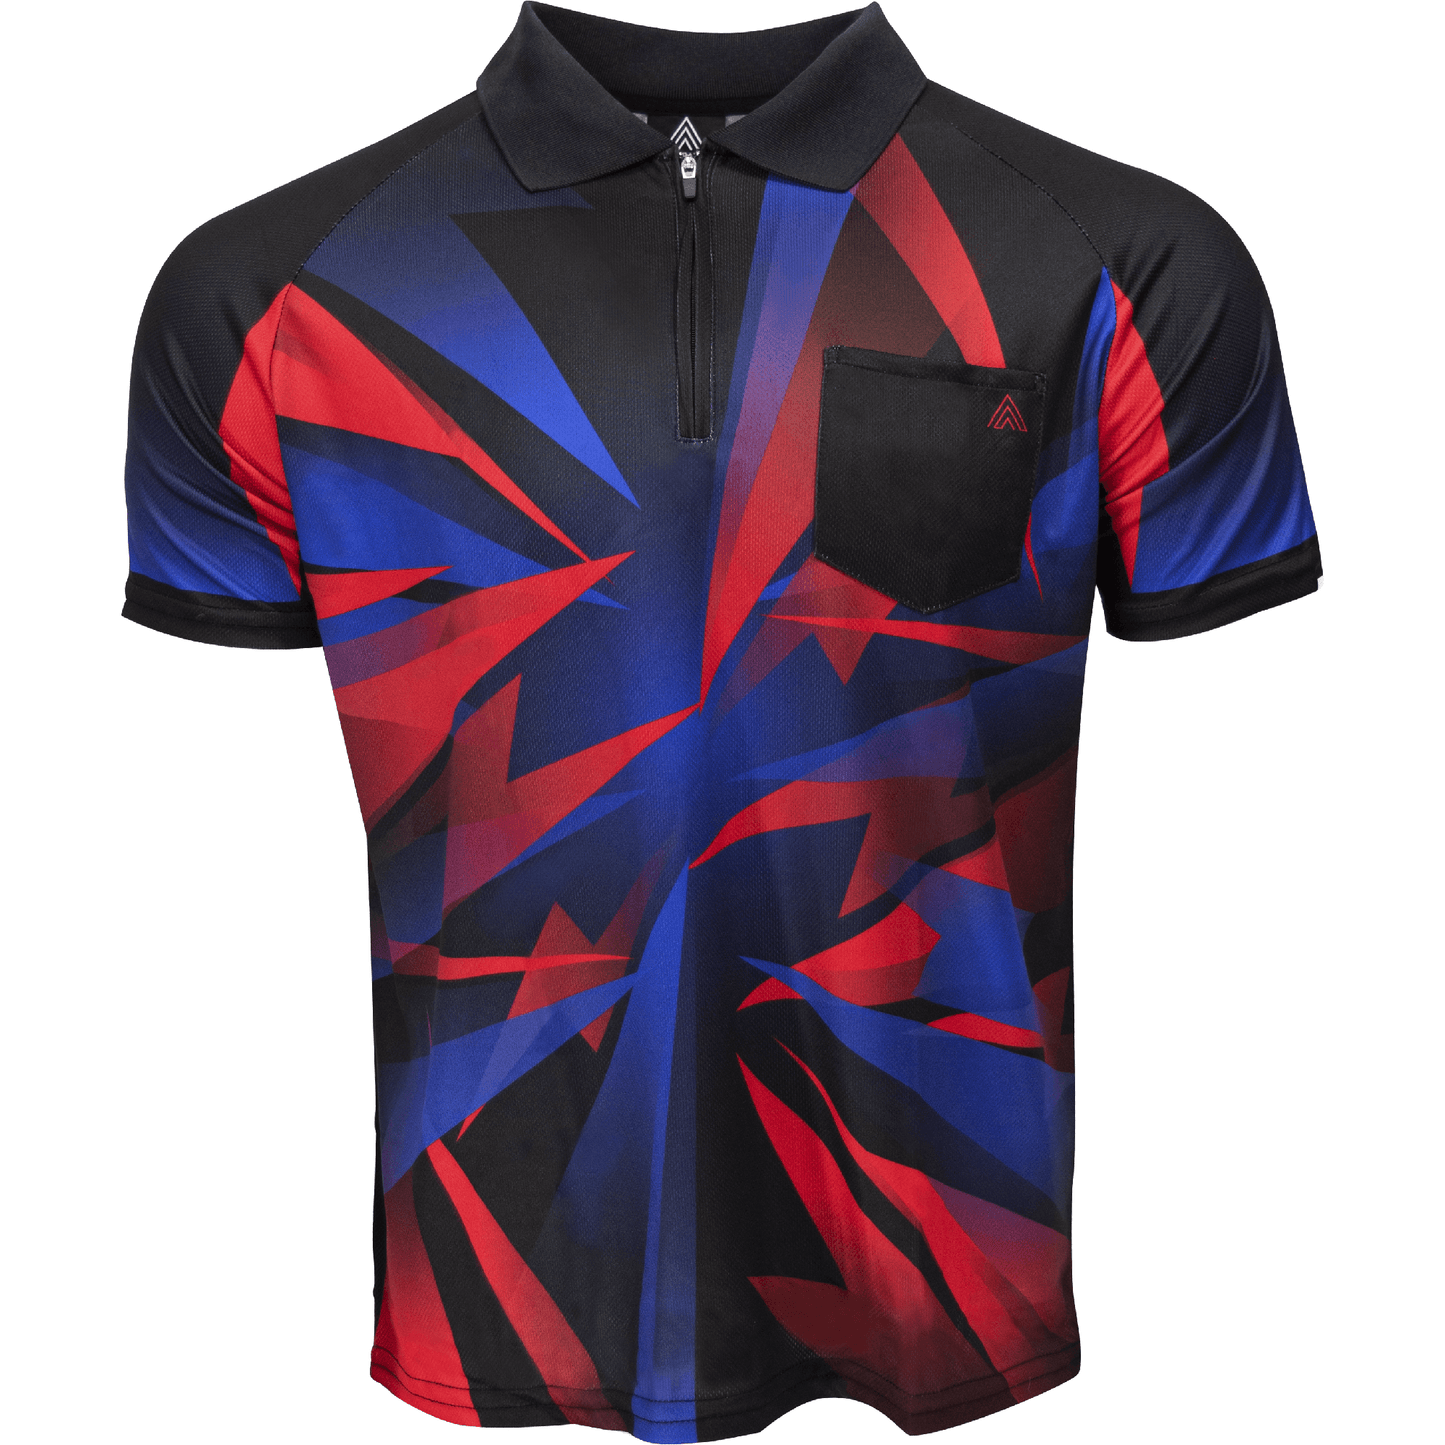 *Arraz Shard Dart Shirt - with Pocket - Black & Blue - Red